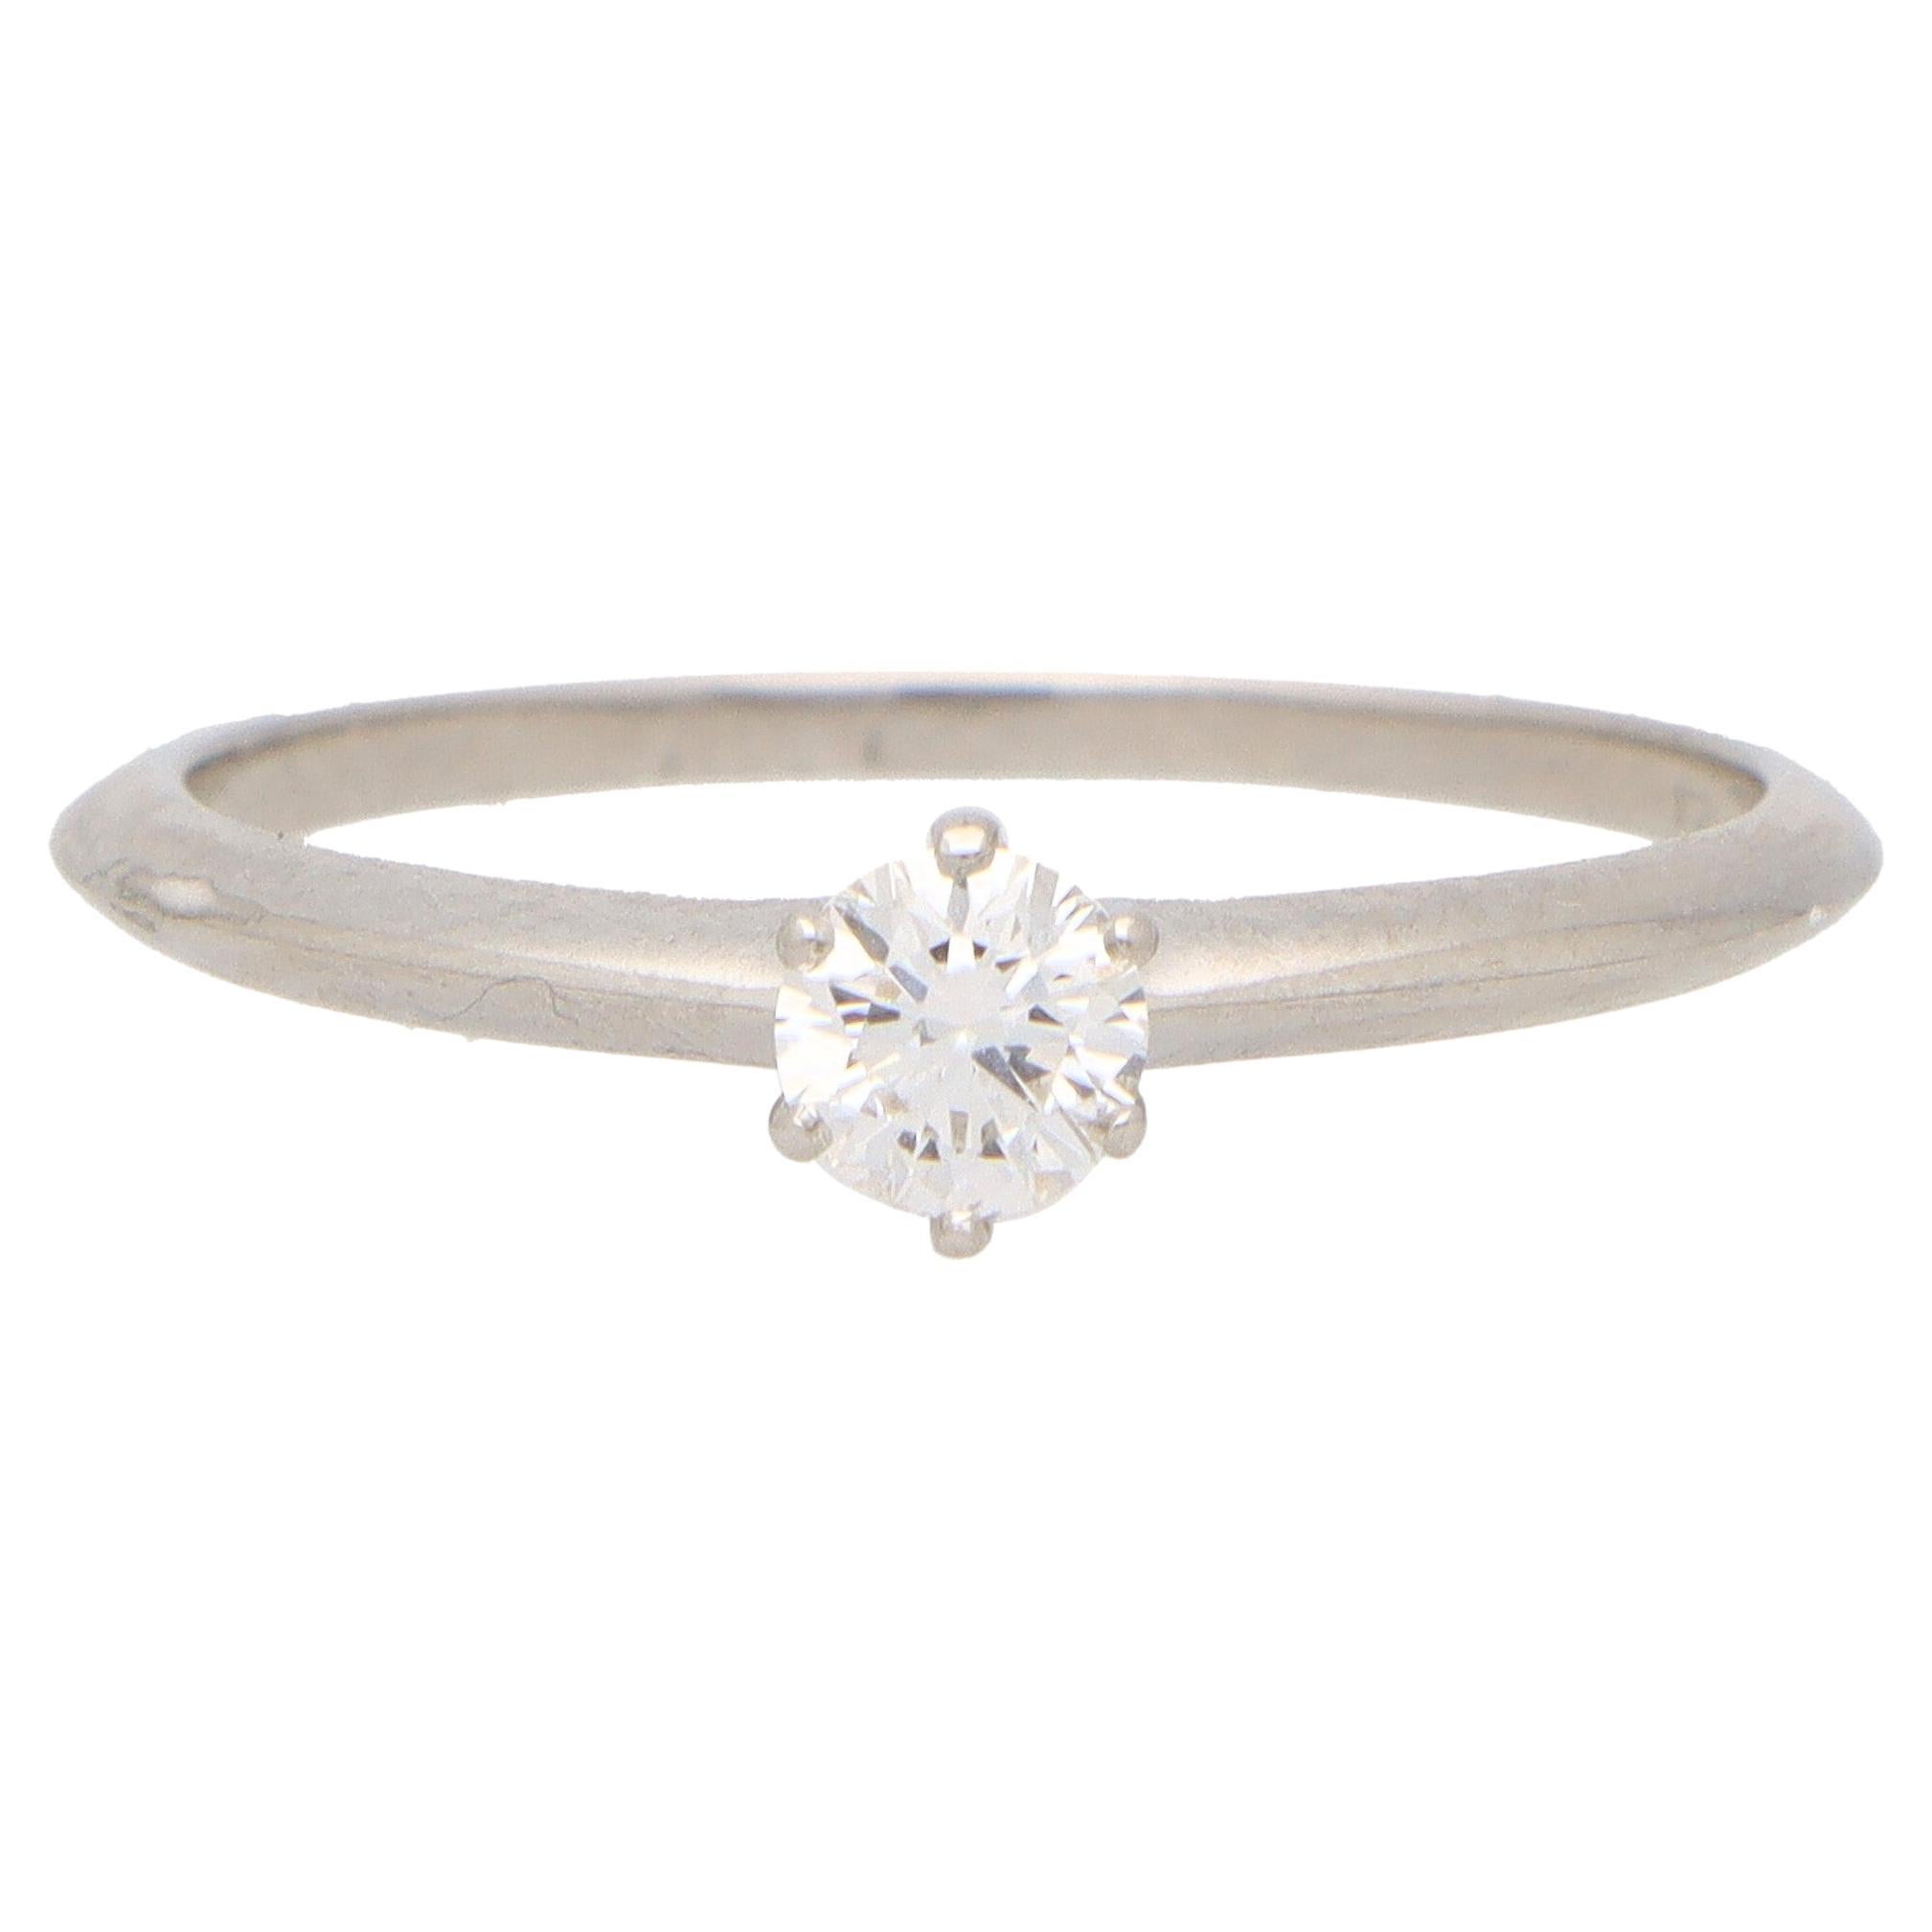 Vintage 0.24ct Tiffany & Co. Round Brilliant Cut Diamond Ring Set in Platinum